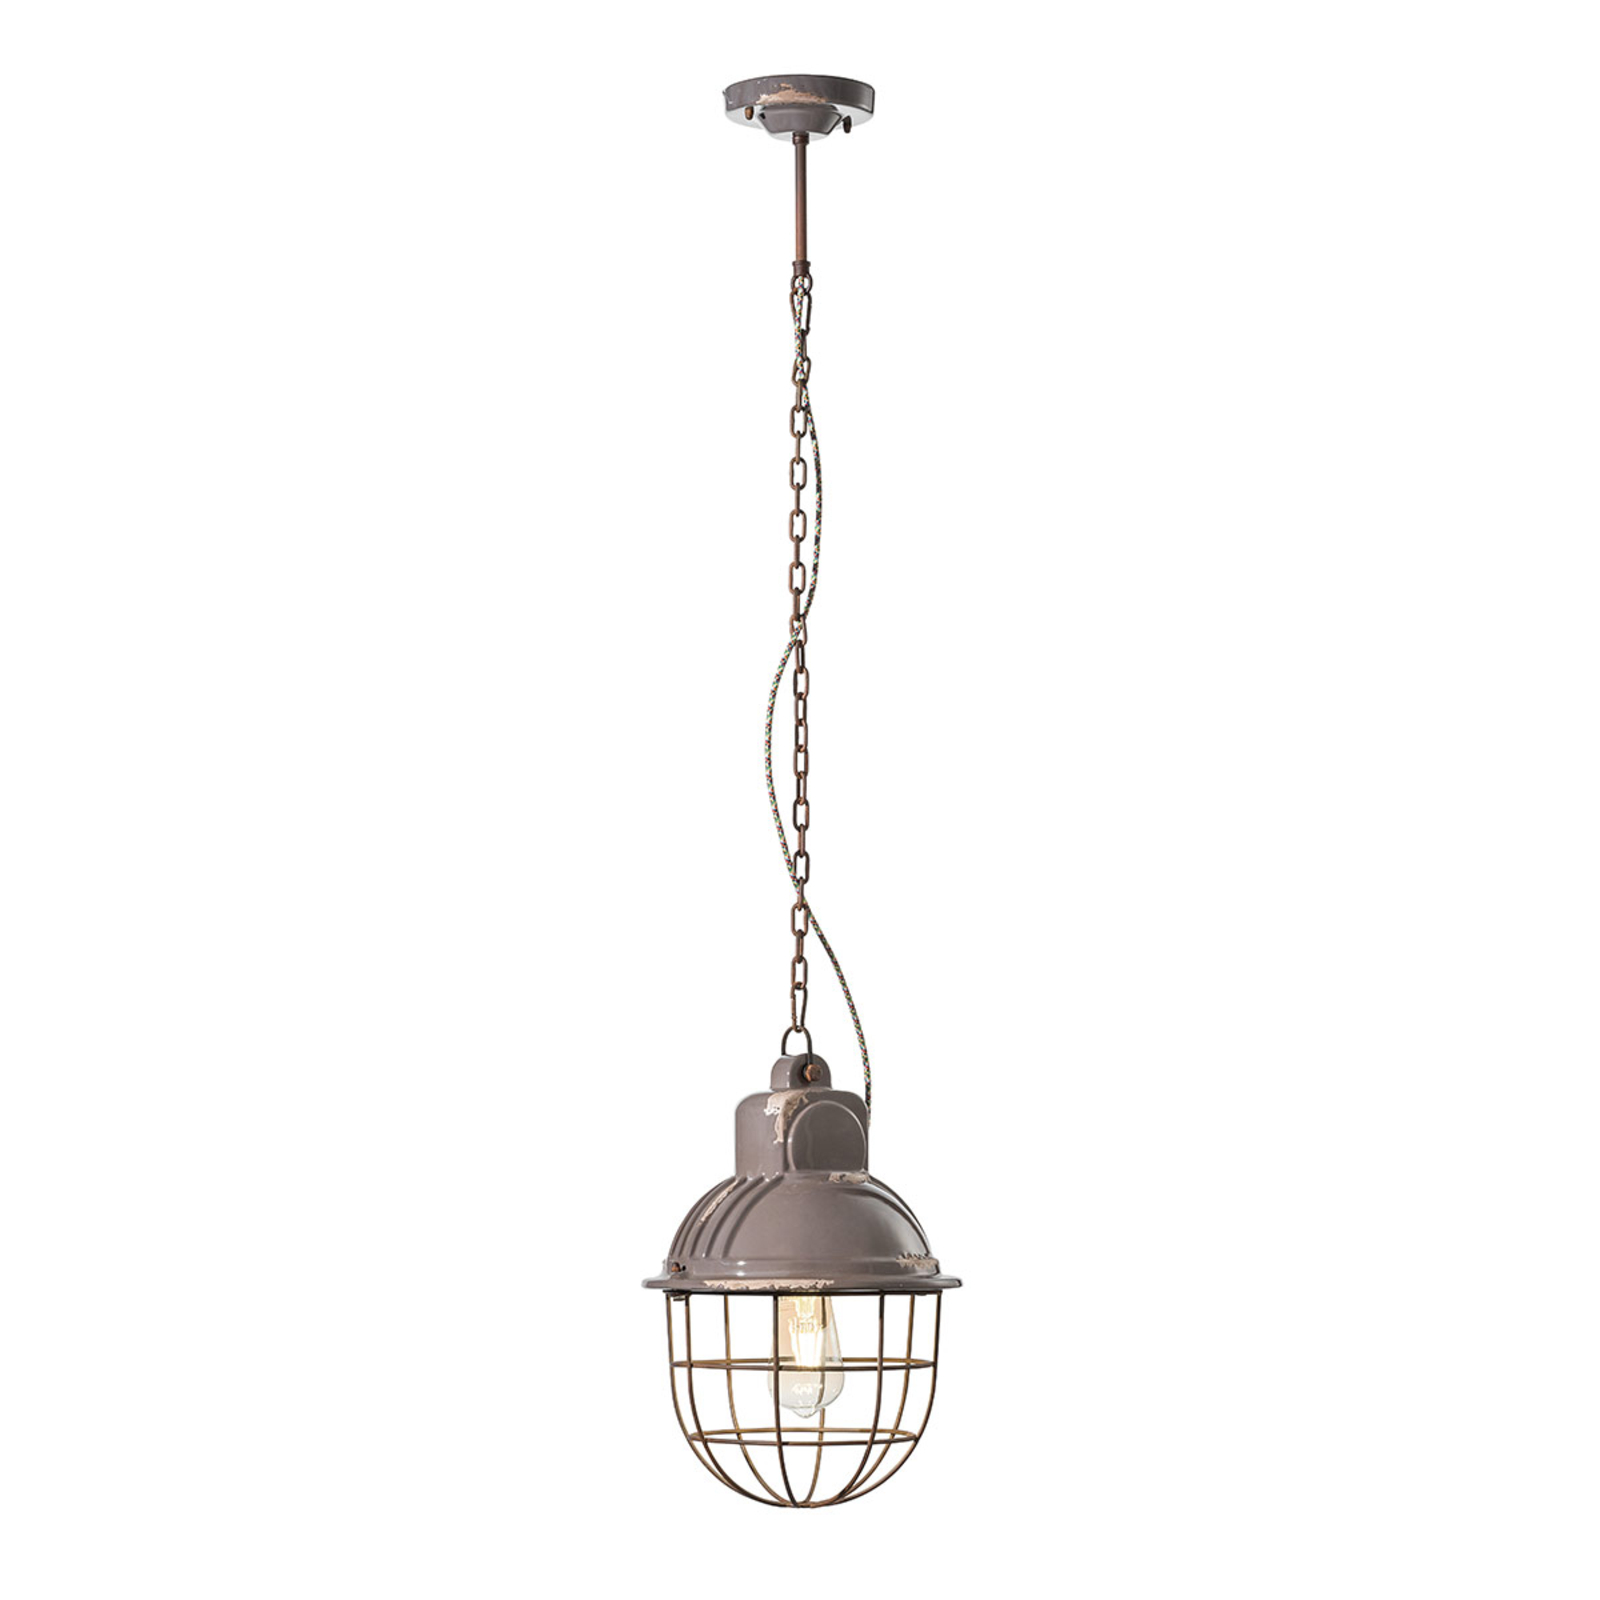 C1770 hanging light, industrial design dove